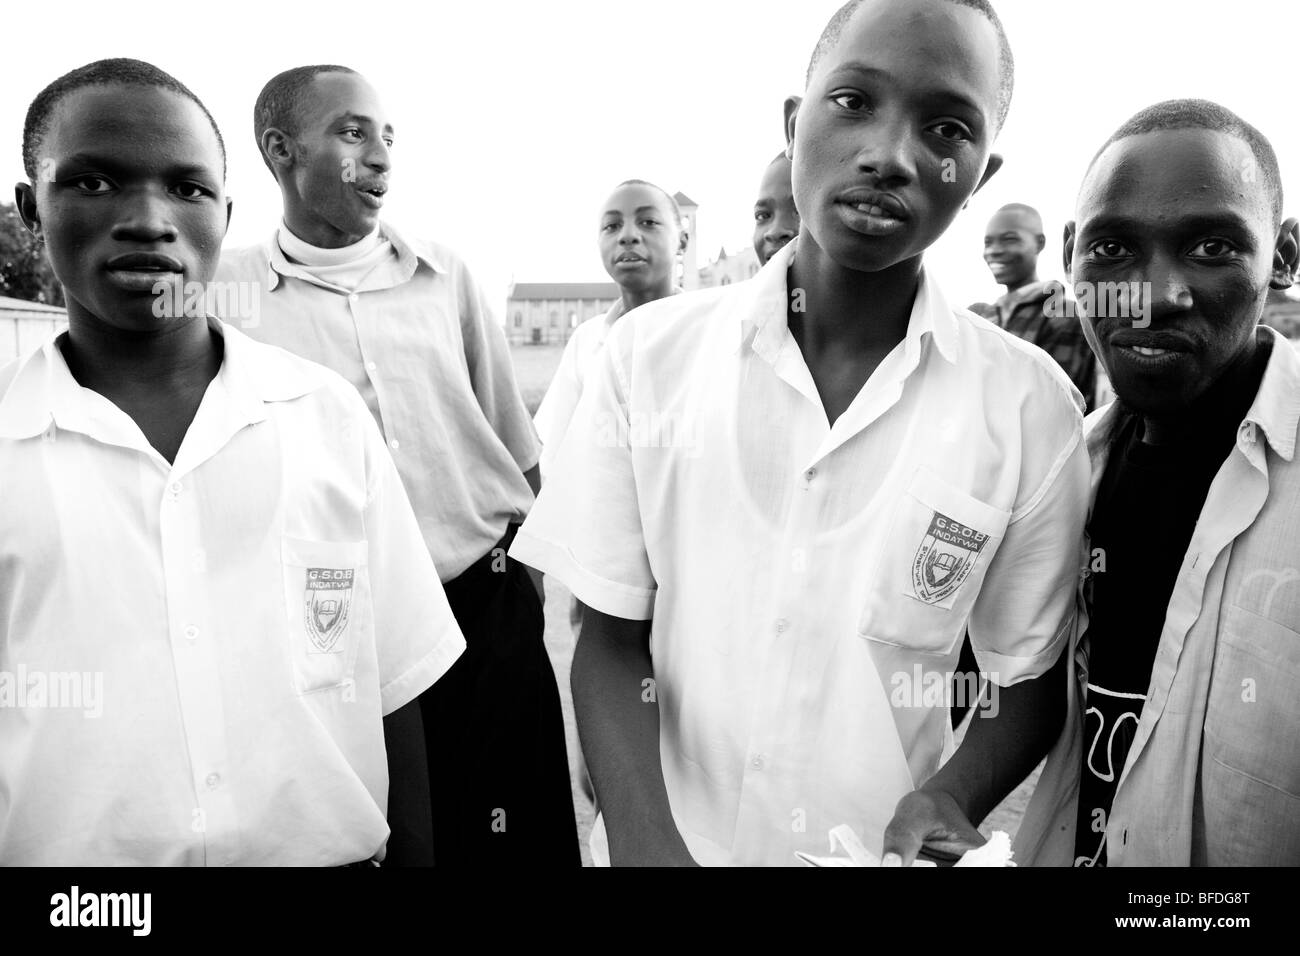 Students in the city of Butare, Rwanda. Stock Photo